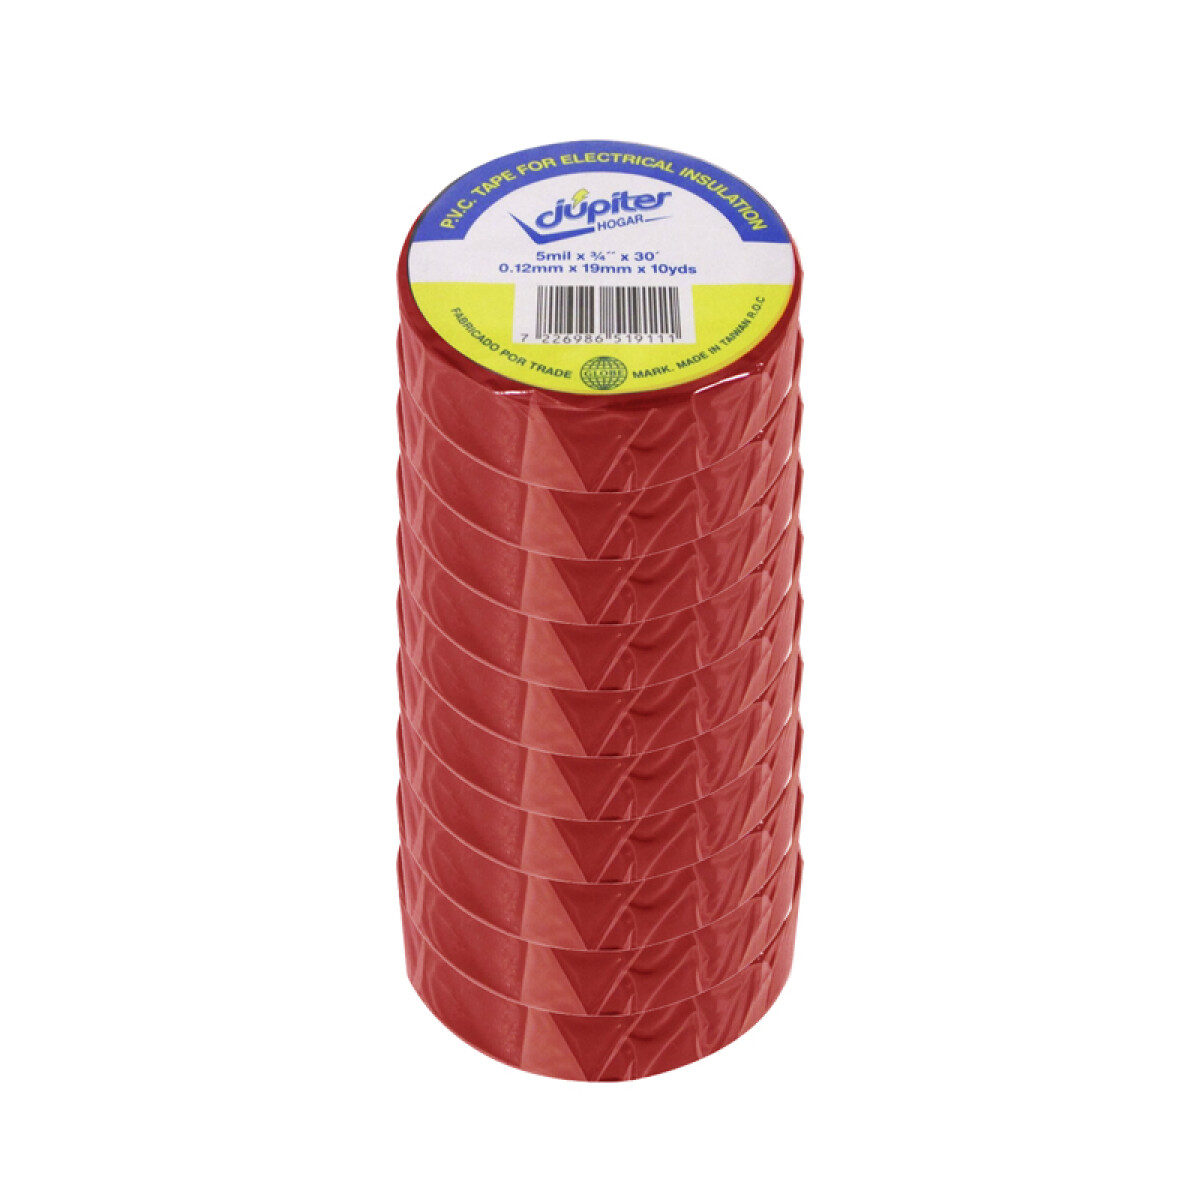 Cinta aisladora JUPITER tubo x10u 0.12mm 19mm x10yds - Rojo 